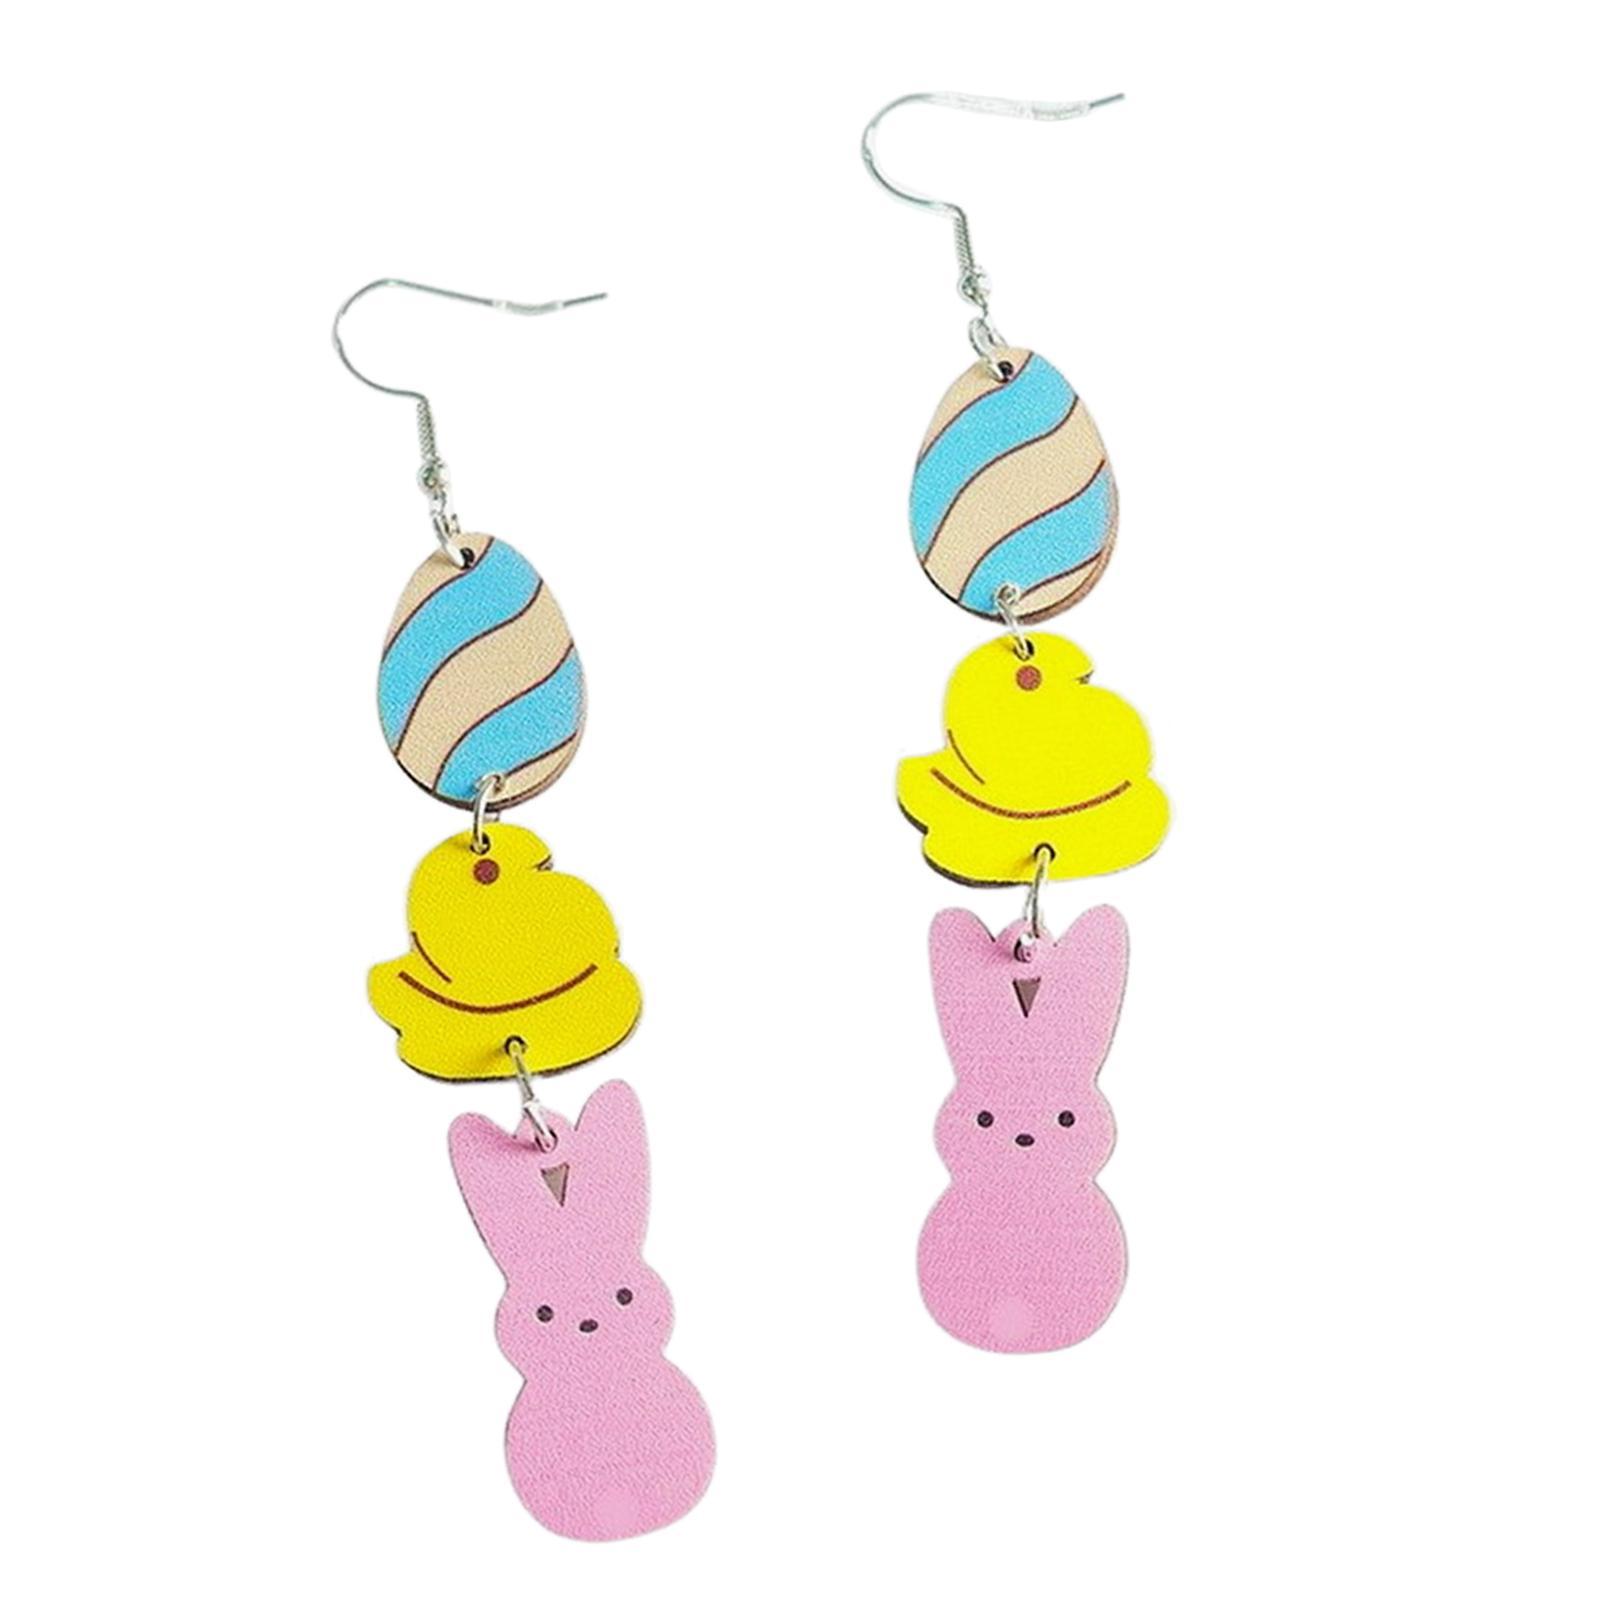 Cute Easter Earrings Trendy Lightweight Jewelry for Holiday Women Teens